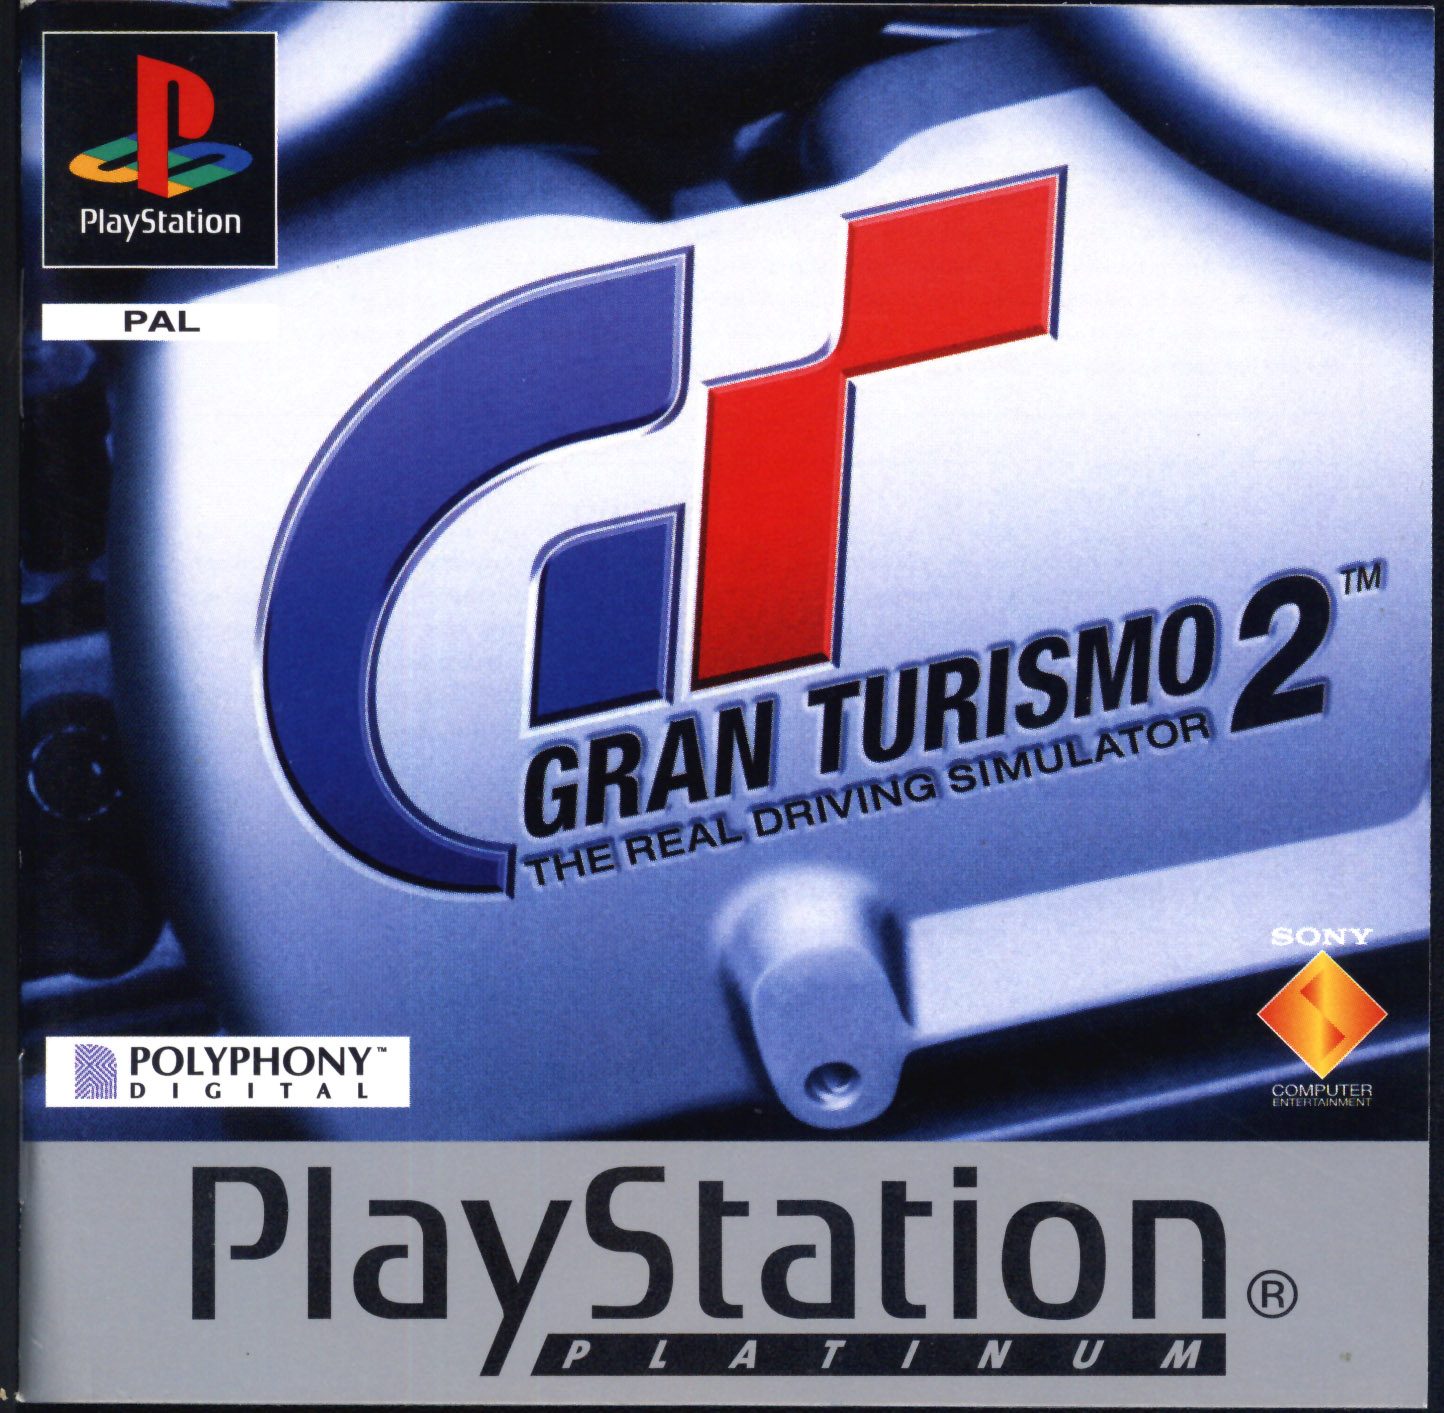 Gran Turismo 2 - The Real Driving Simulator PSX cover